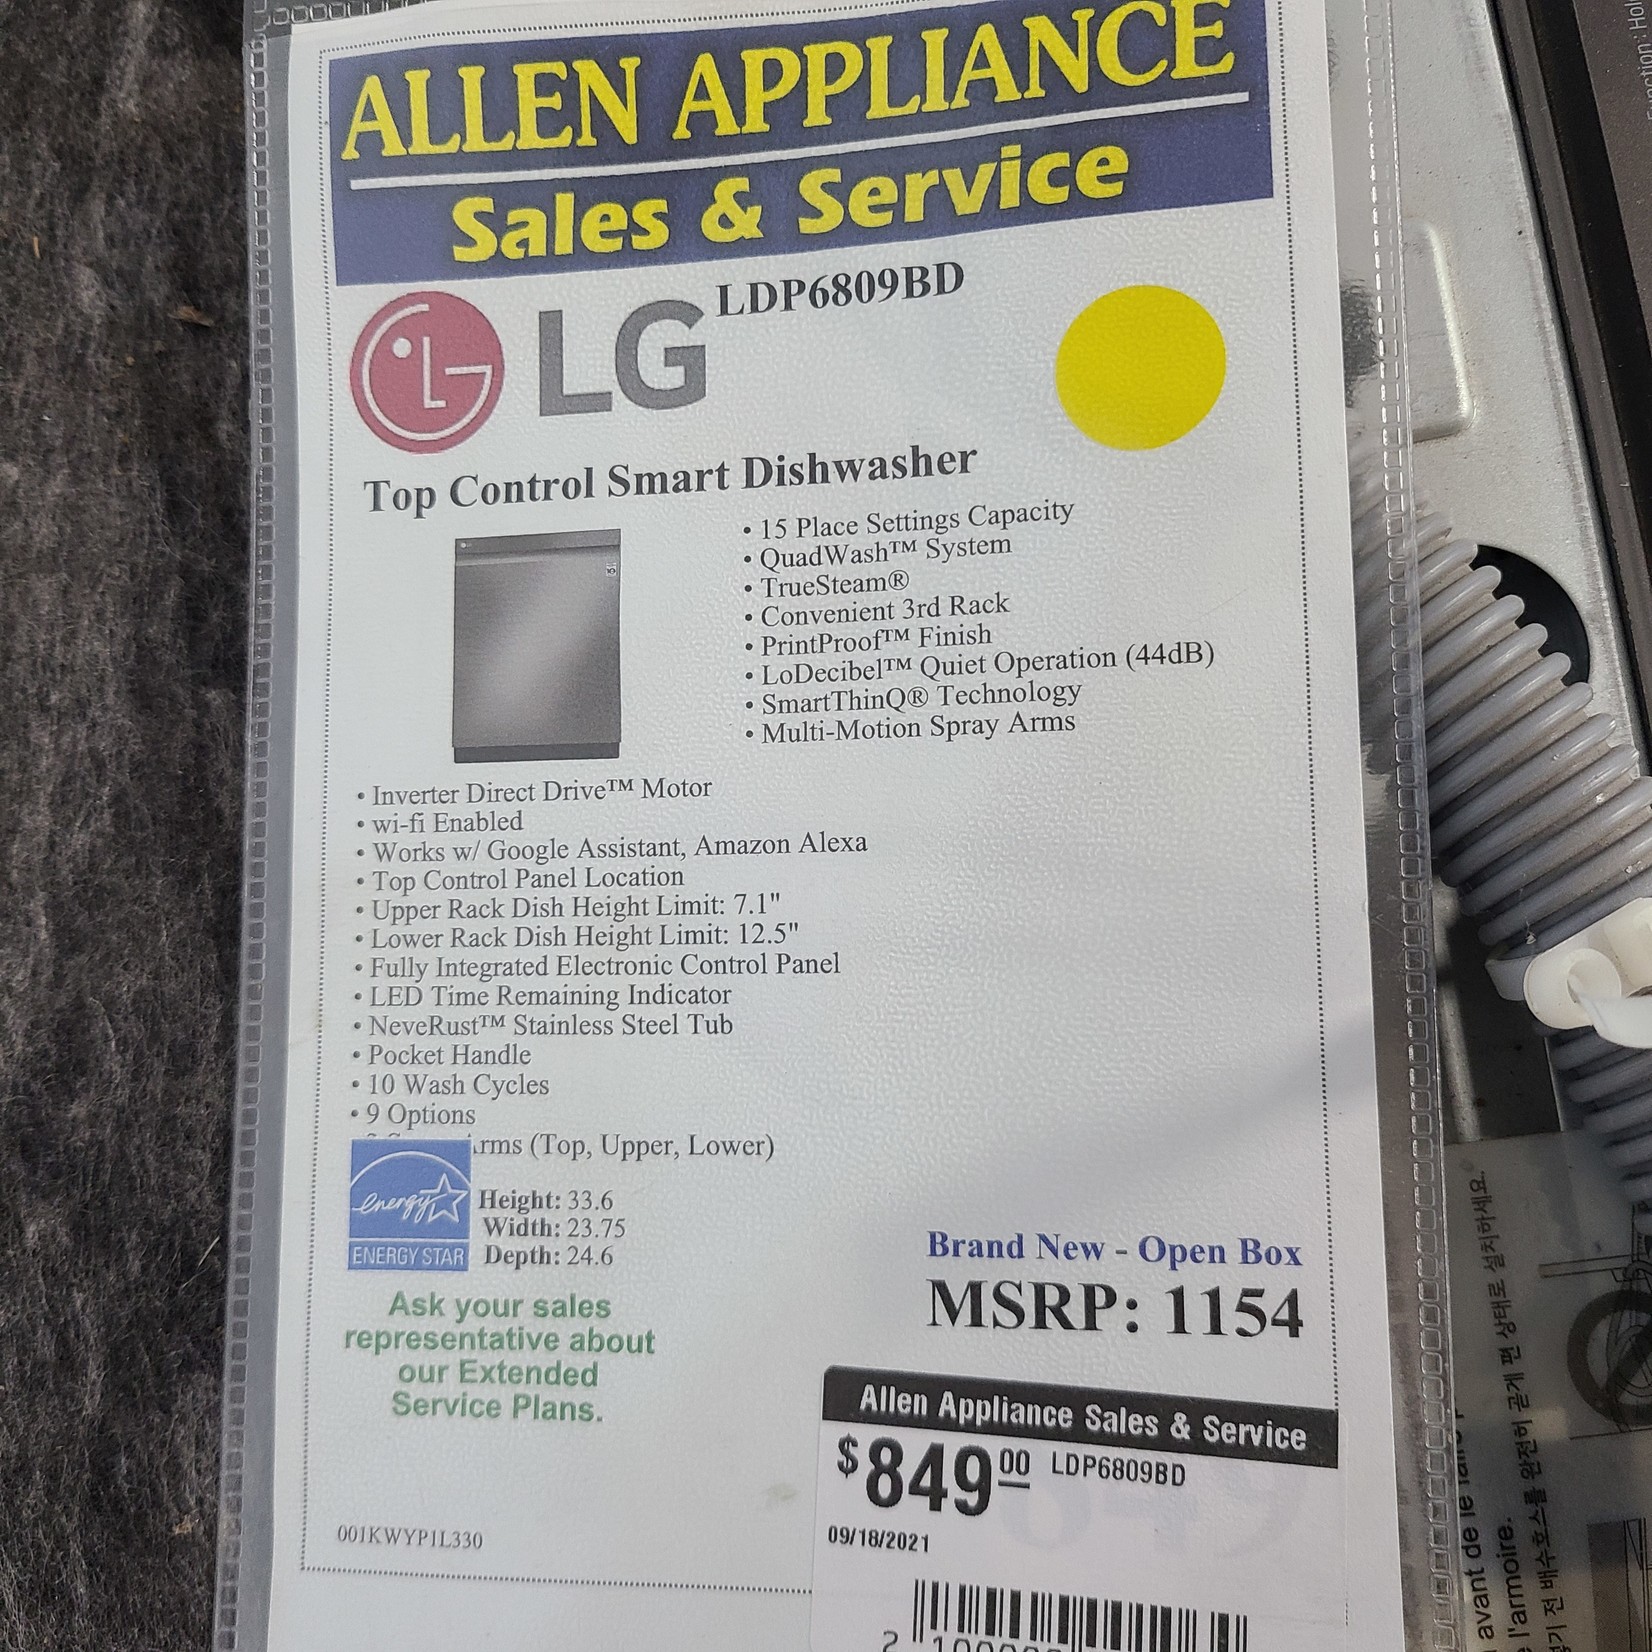 LG LG Top Control Smart Dishwasher - LDP6809BD - 001KWYP1L330